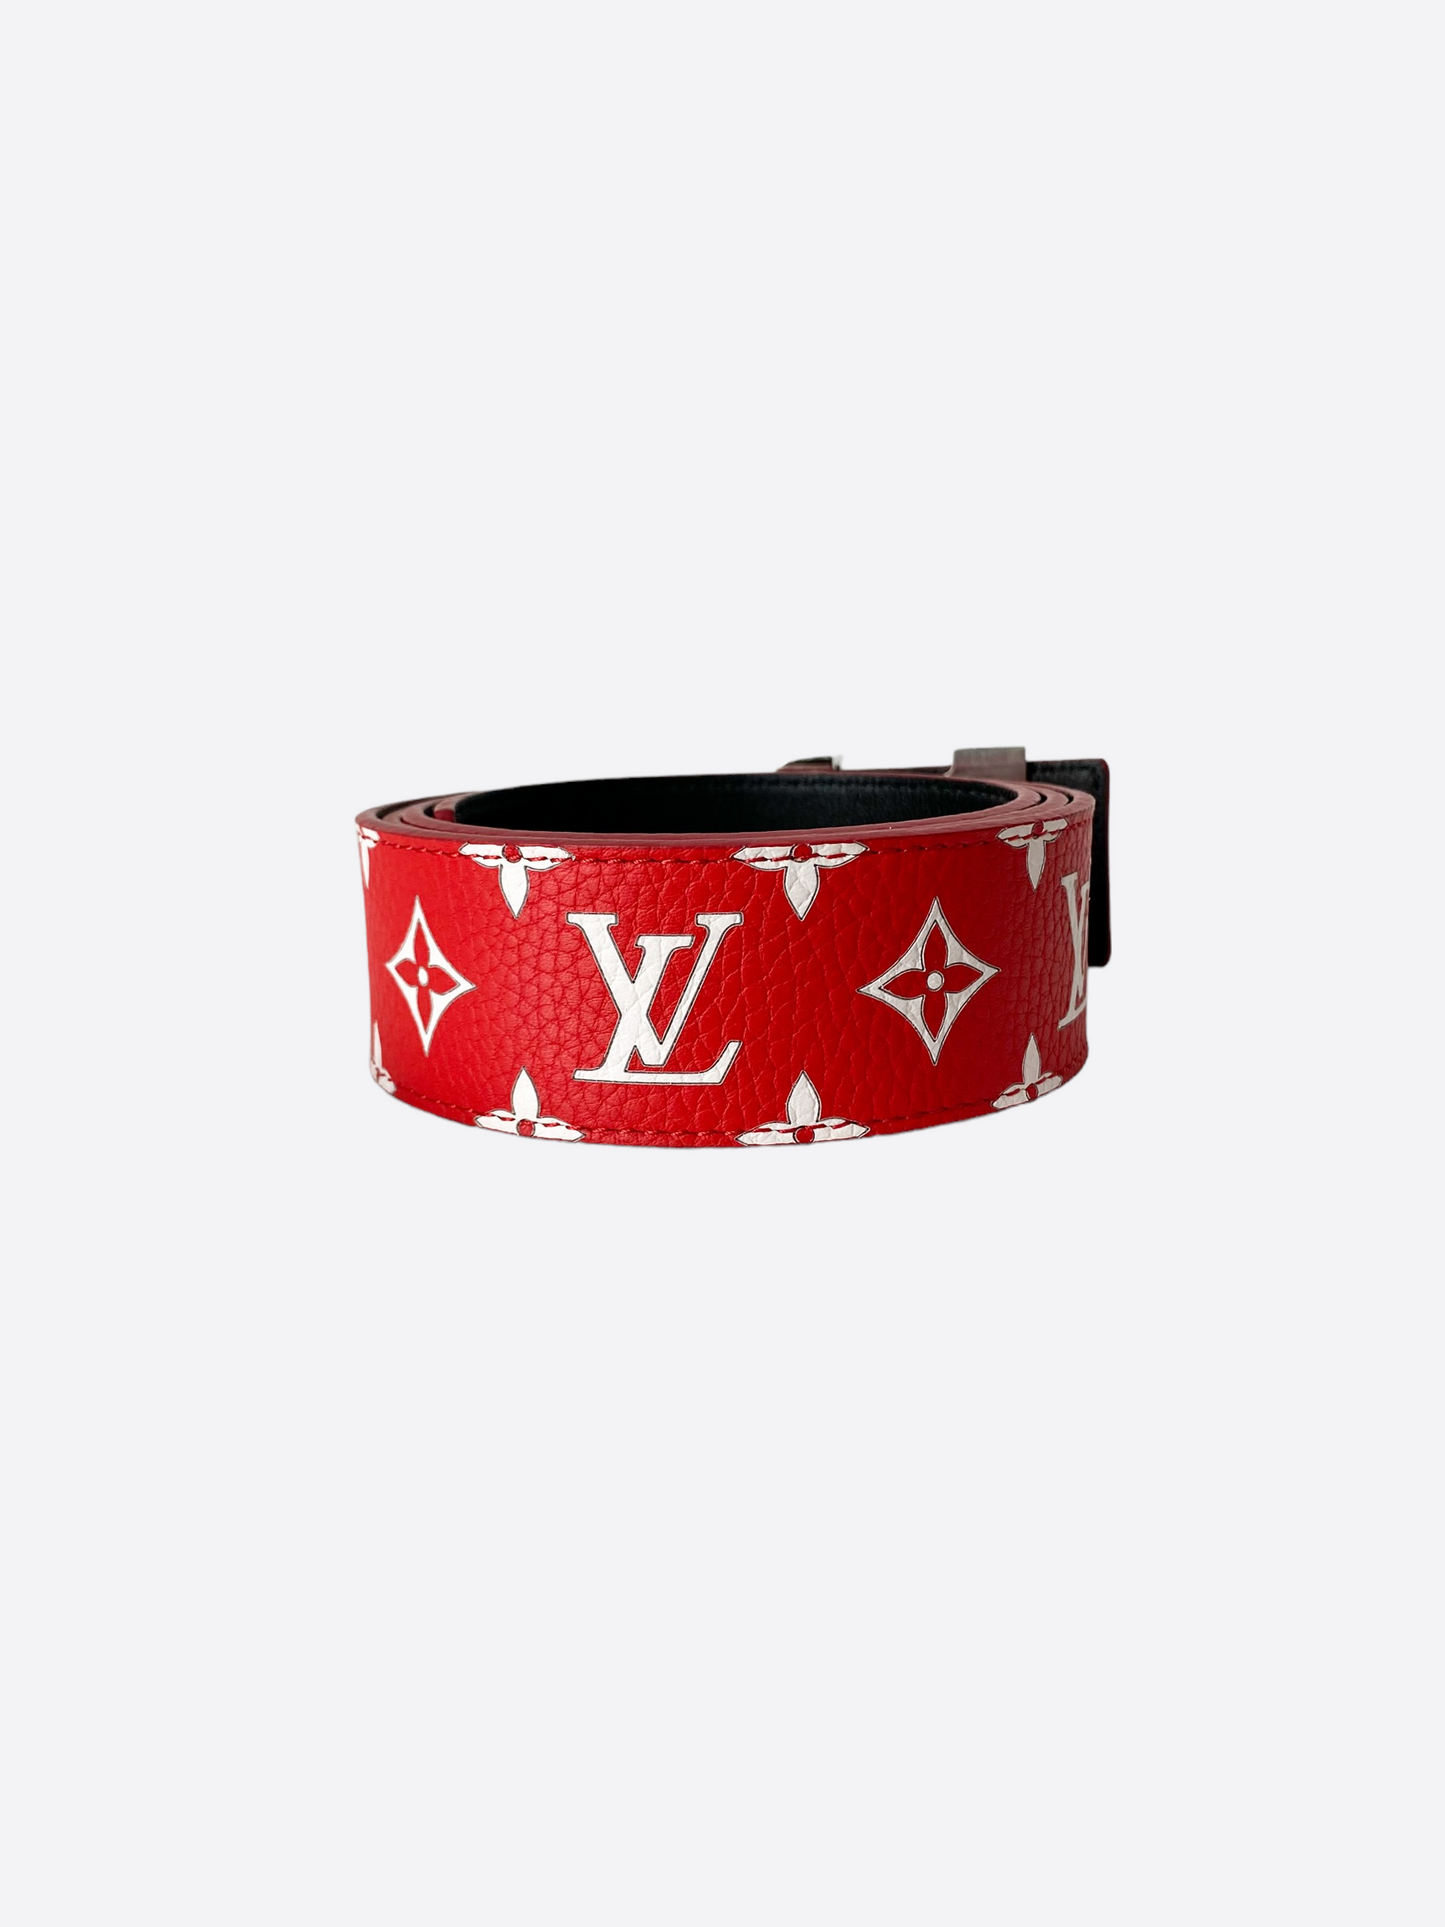 Louis Vuitton x Supreme Red Belt Sz 95 New With Receipt/Box